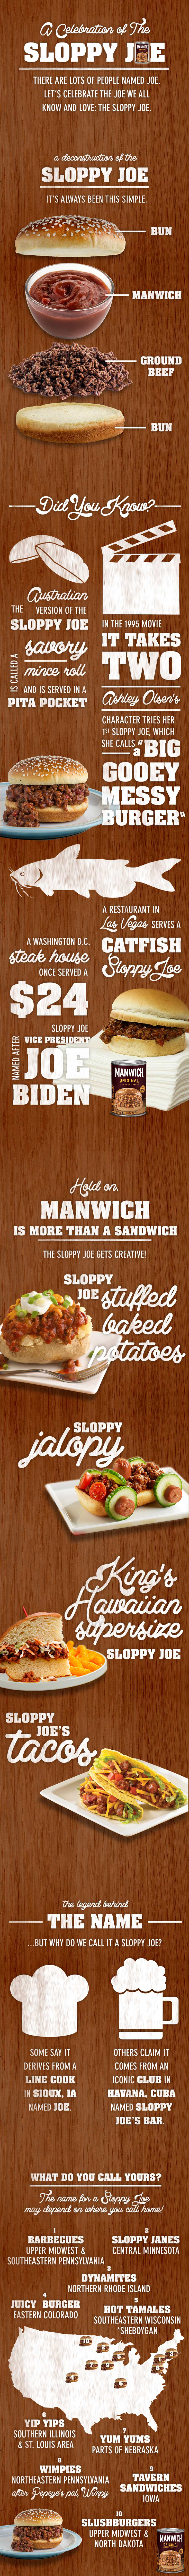 Manwich infographic showing the Sloppy Joe story and Sloppy Joe recipes